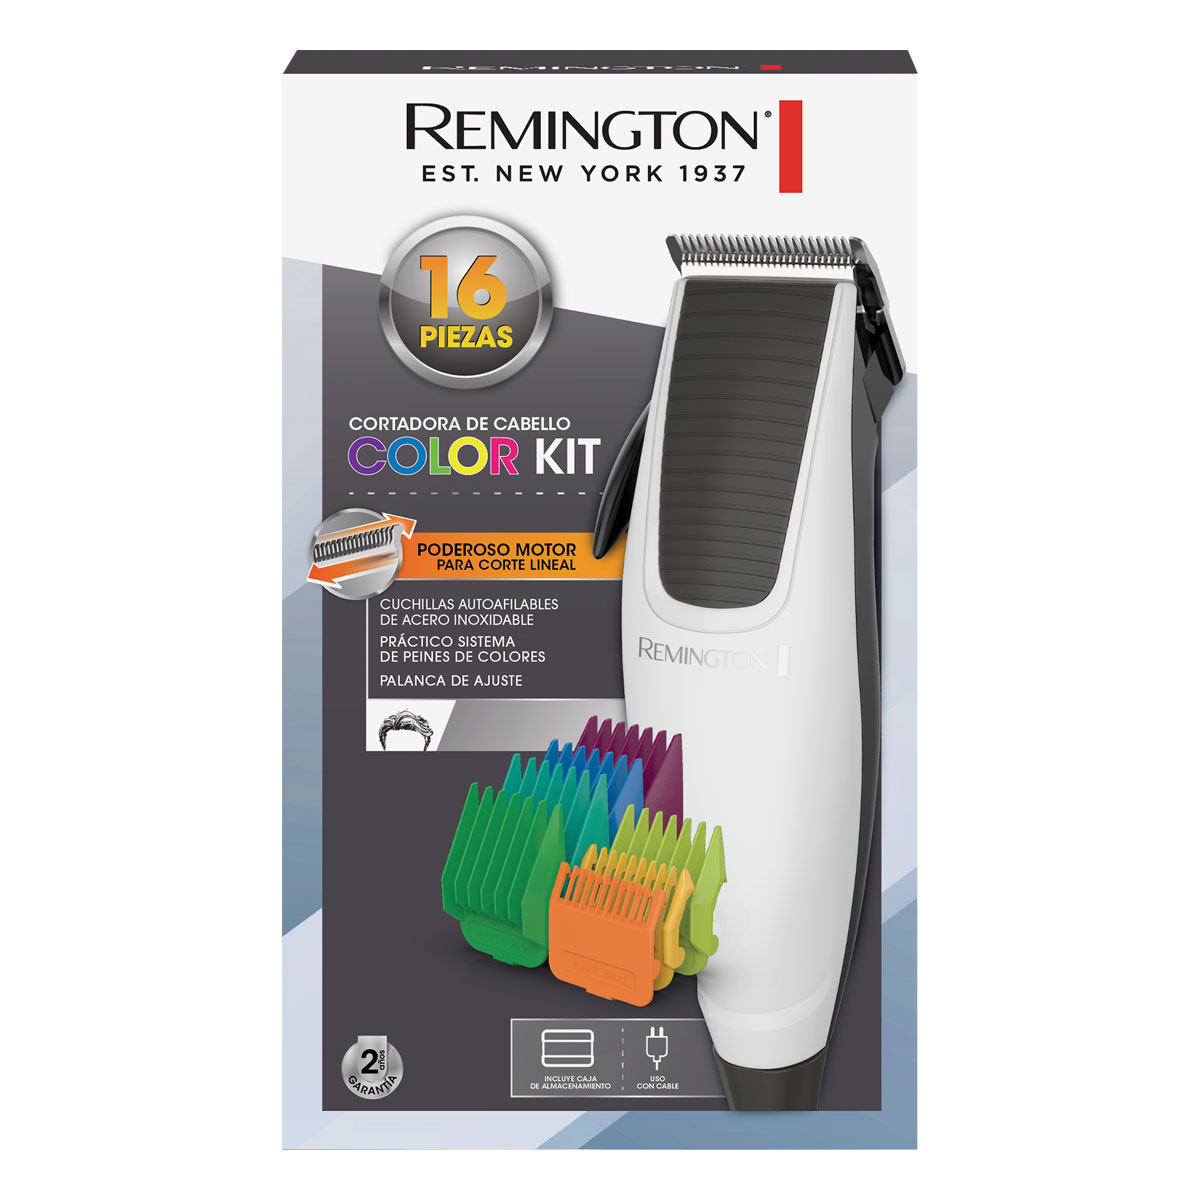 Cortadora De Cabello Remington con peines de colores – Remington Guatemala